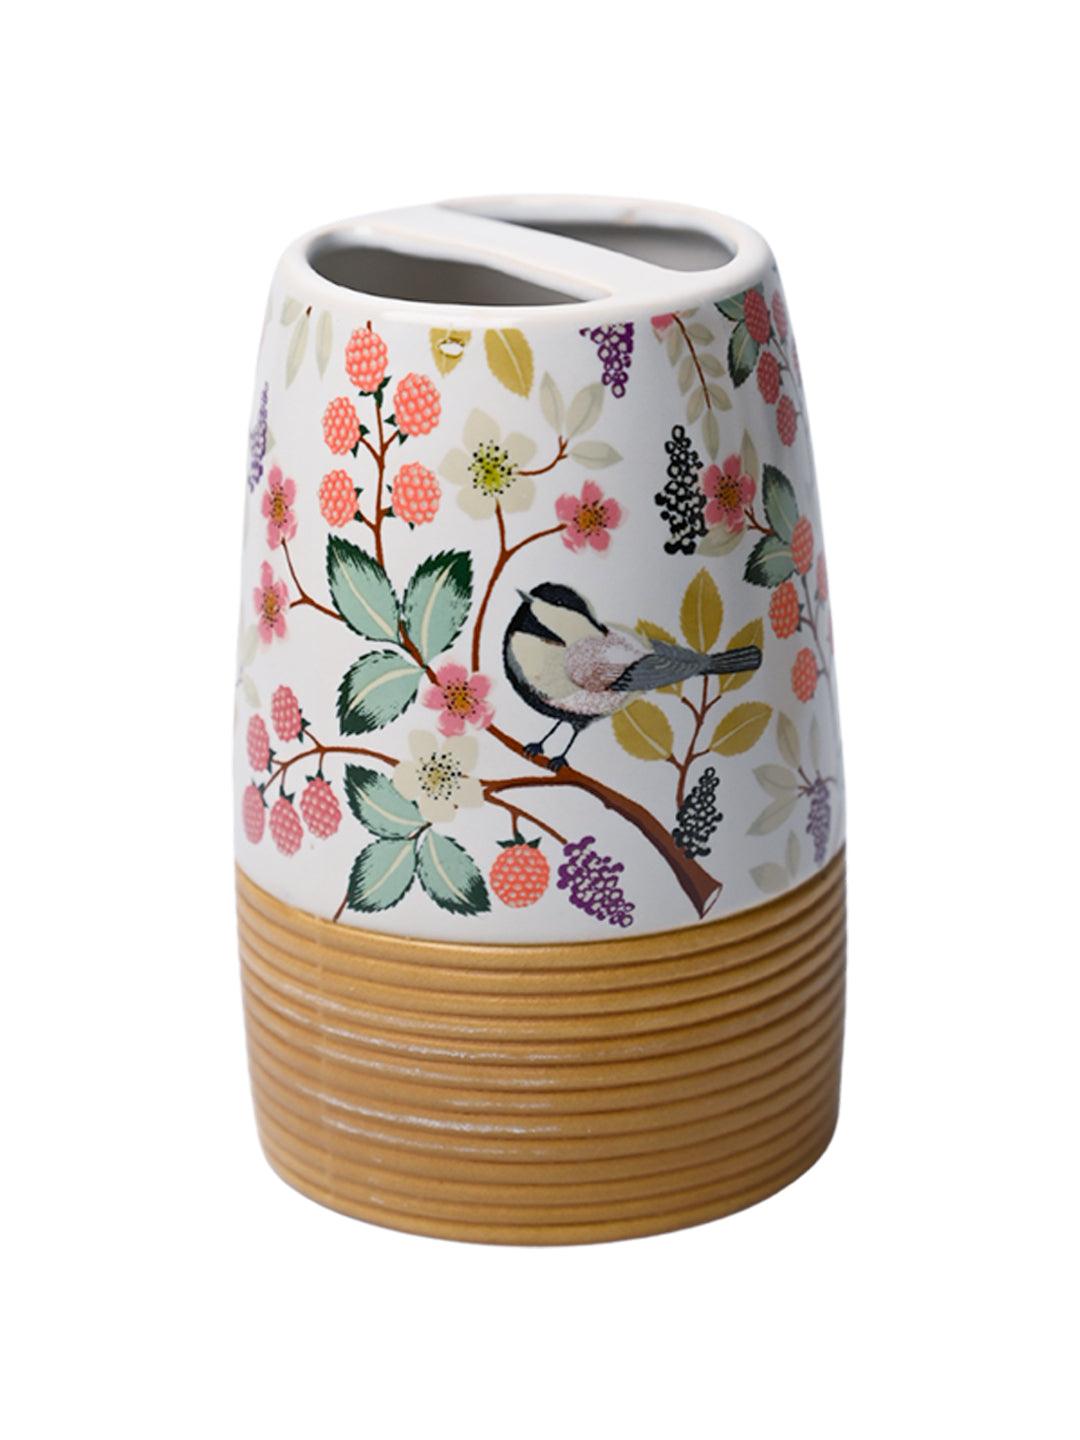 Multicolor Ceramic Cylindrical Bathroom Set Of 4 - Floral Design, Bath Accessories - MARKET99